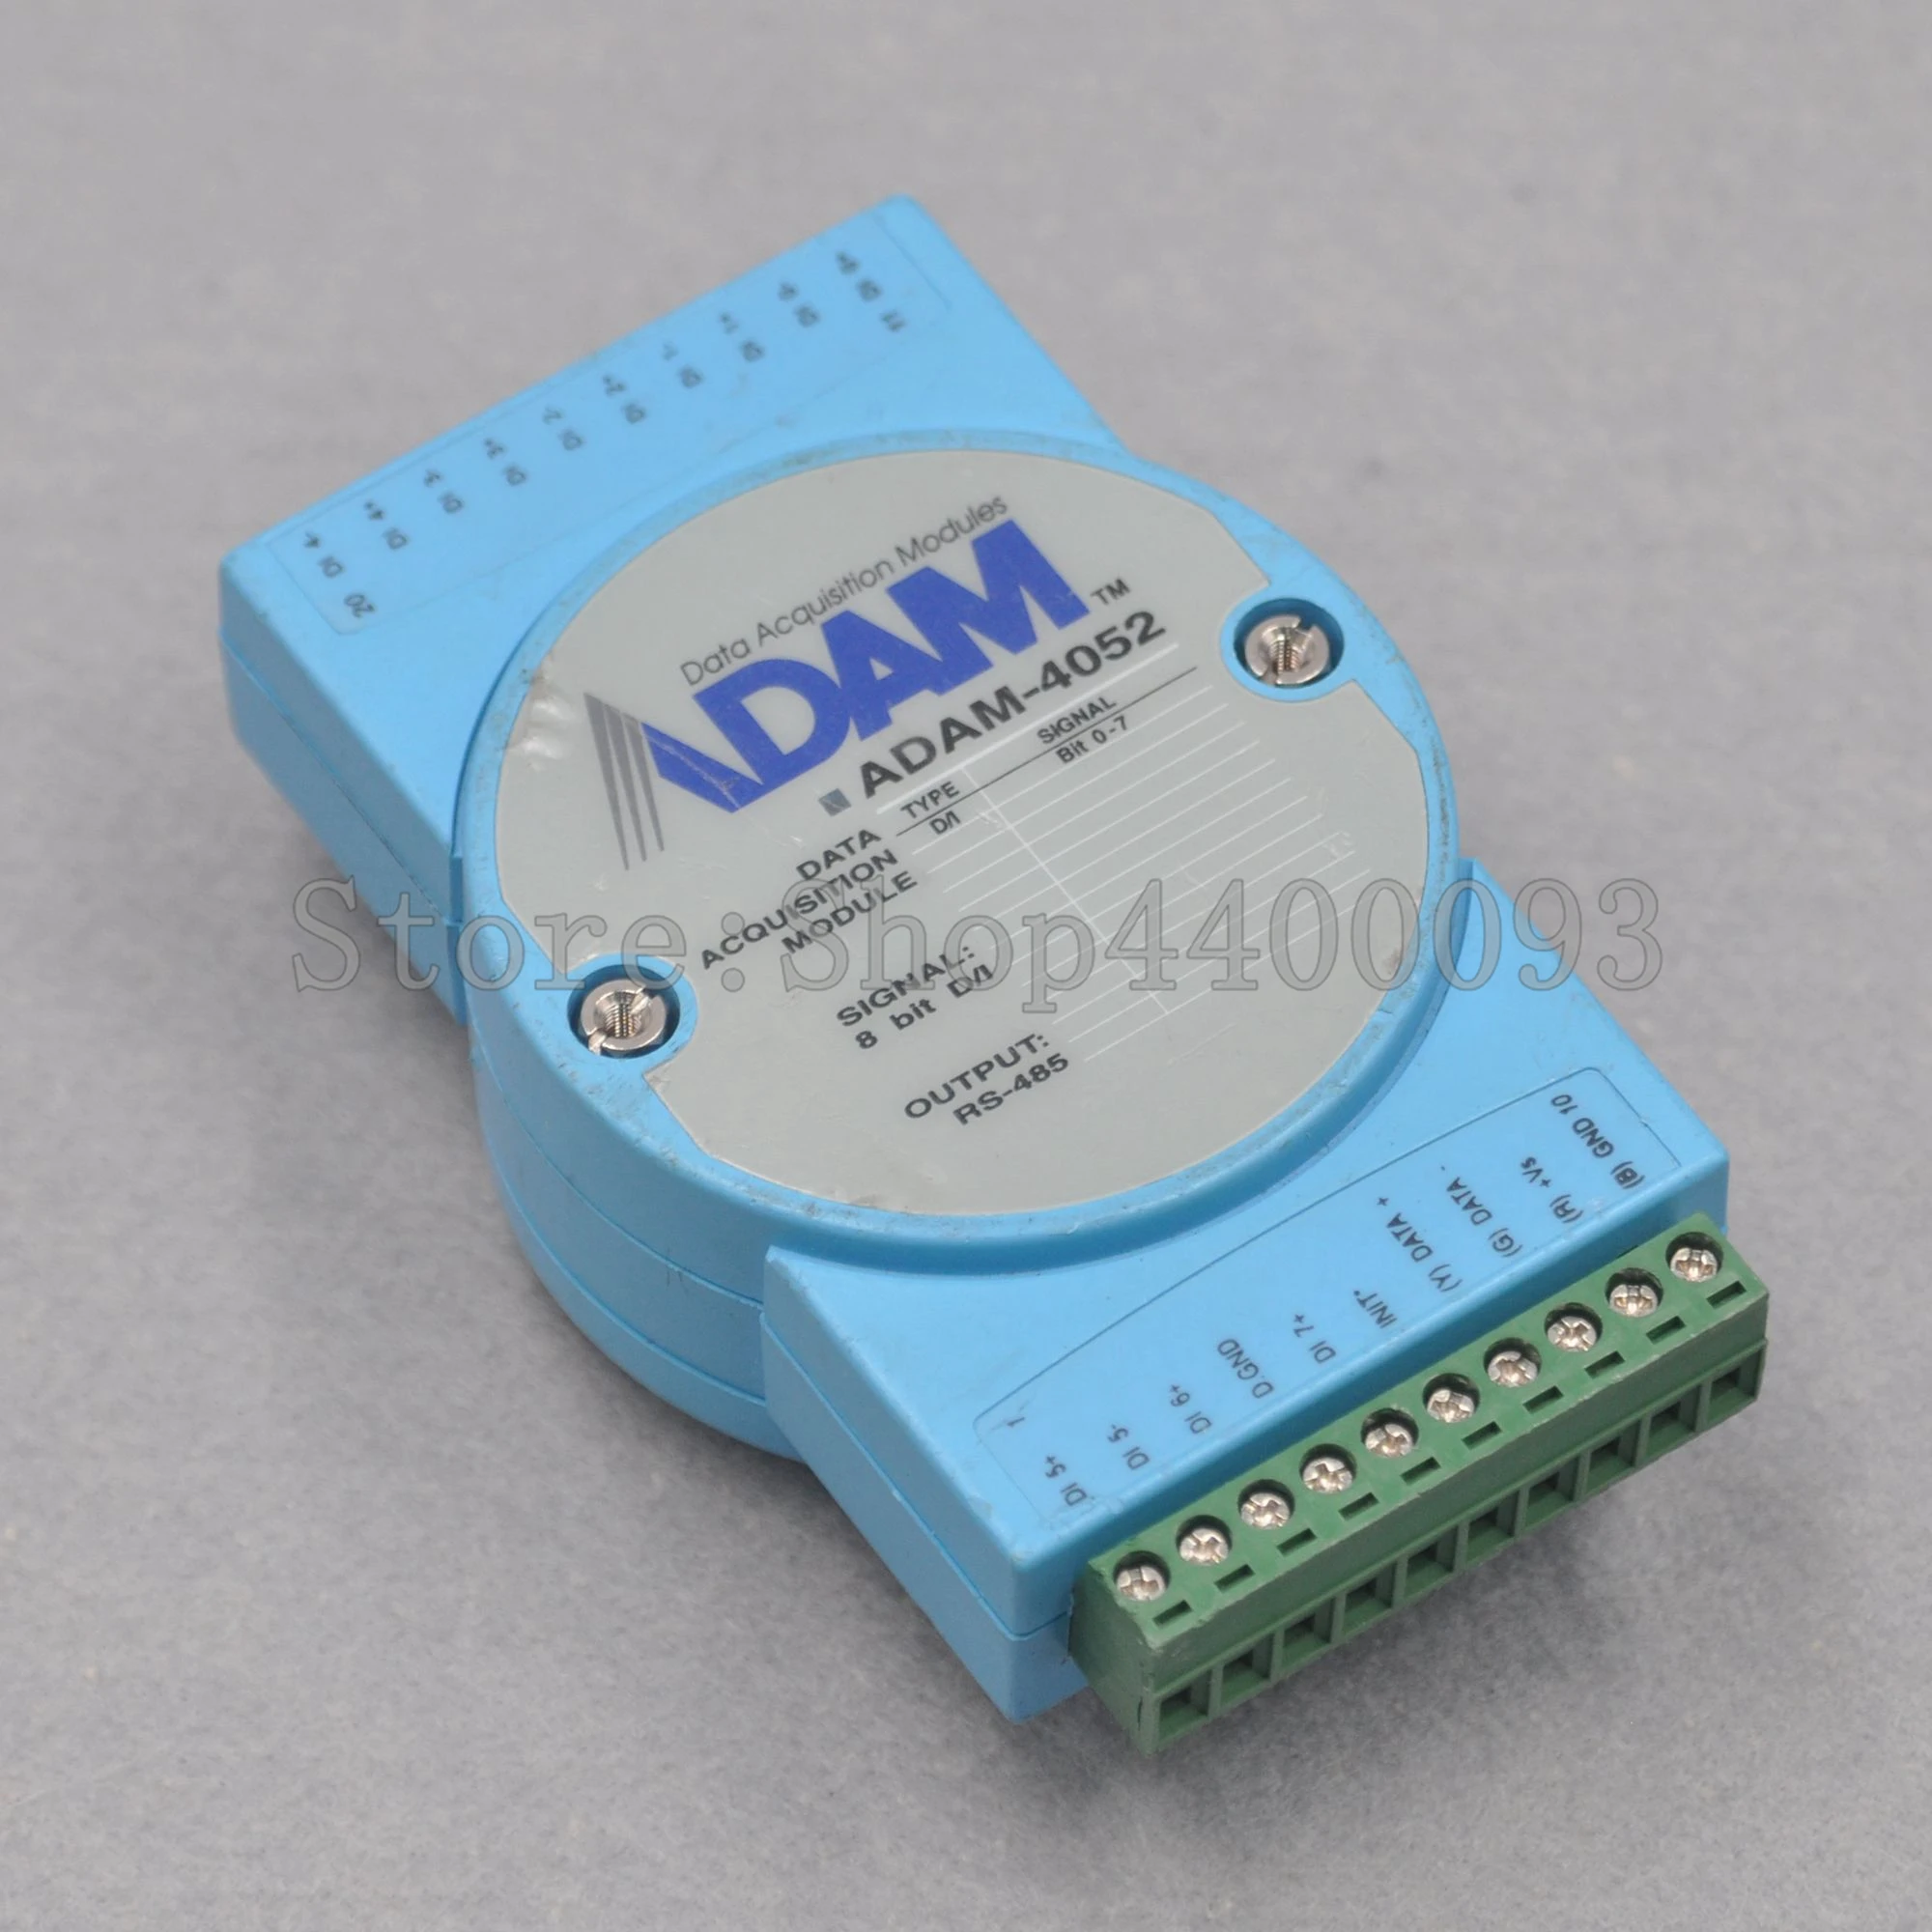 ADAM-4052 8 Isolated Digital Input Module